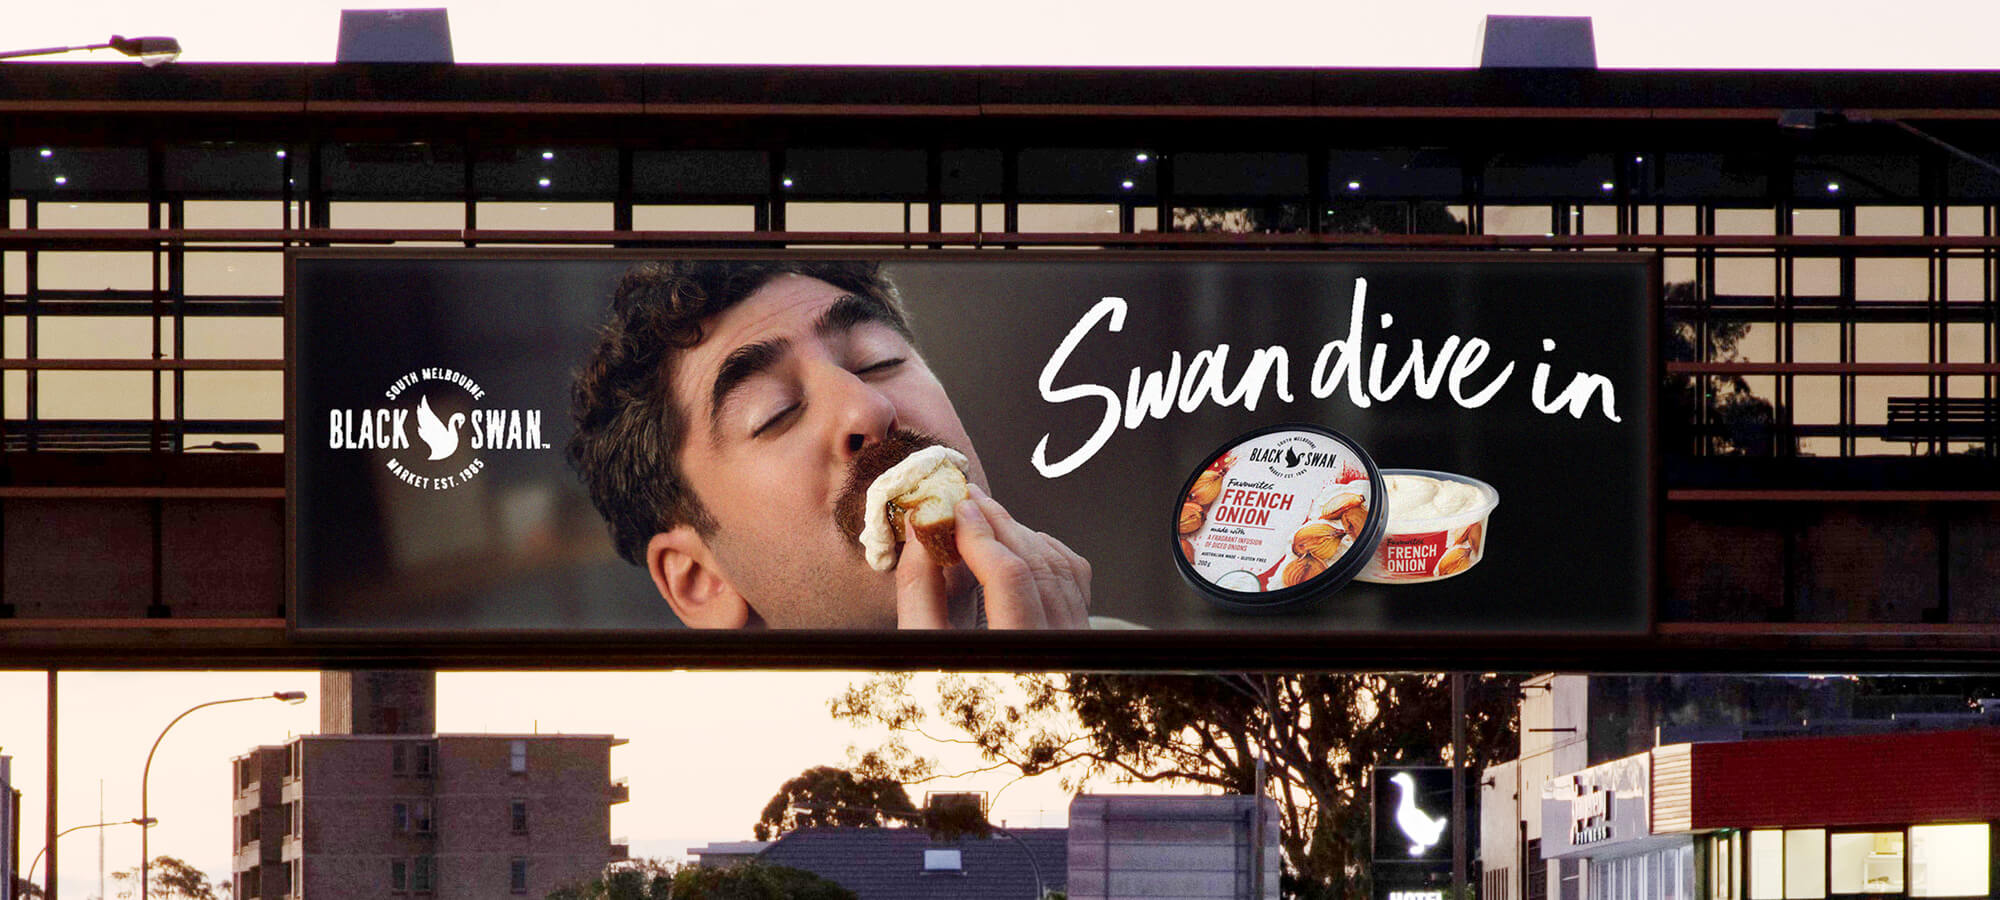 Black Swan billboard swan dive in